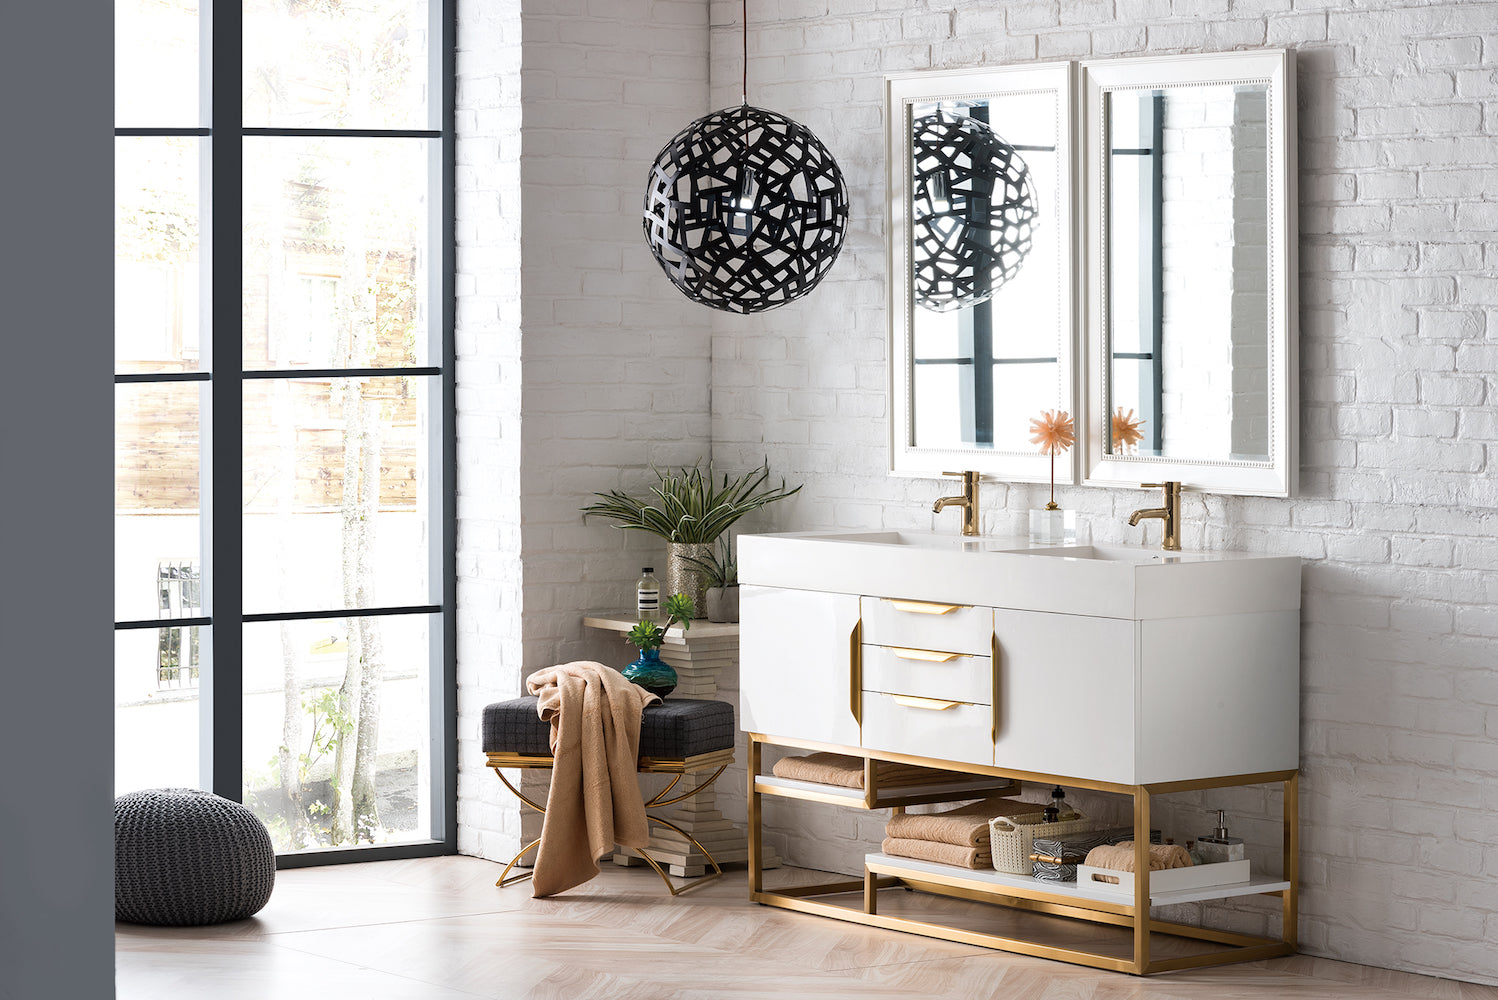 59" Columbia Double Sink Bathroom Vanity, Glossy White w/ Radiant Gold